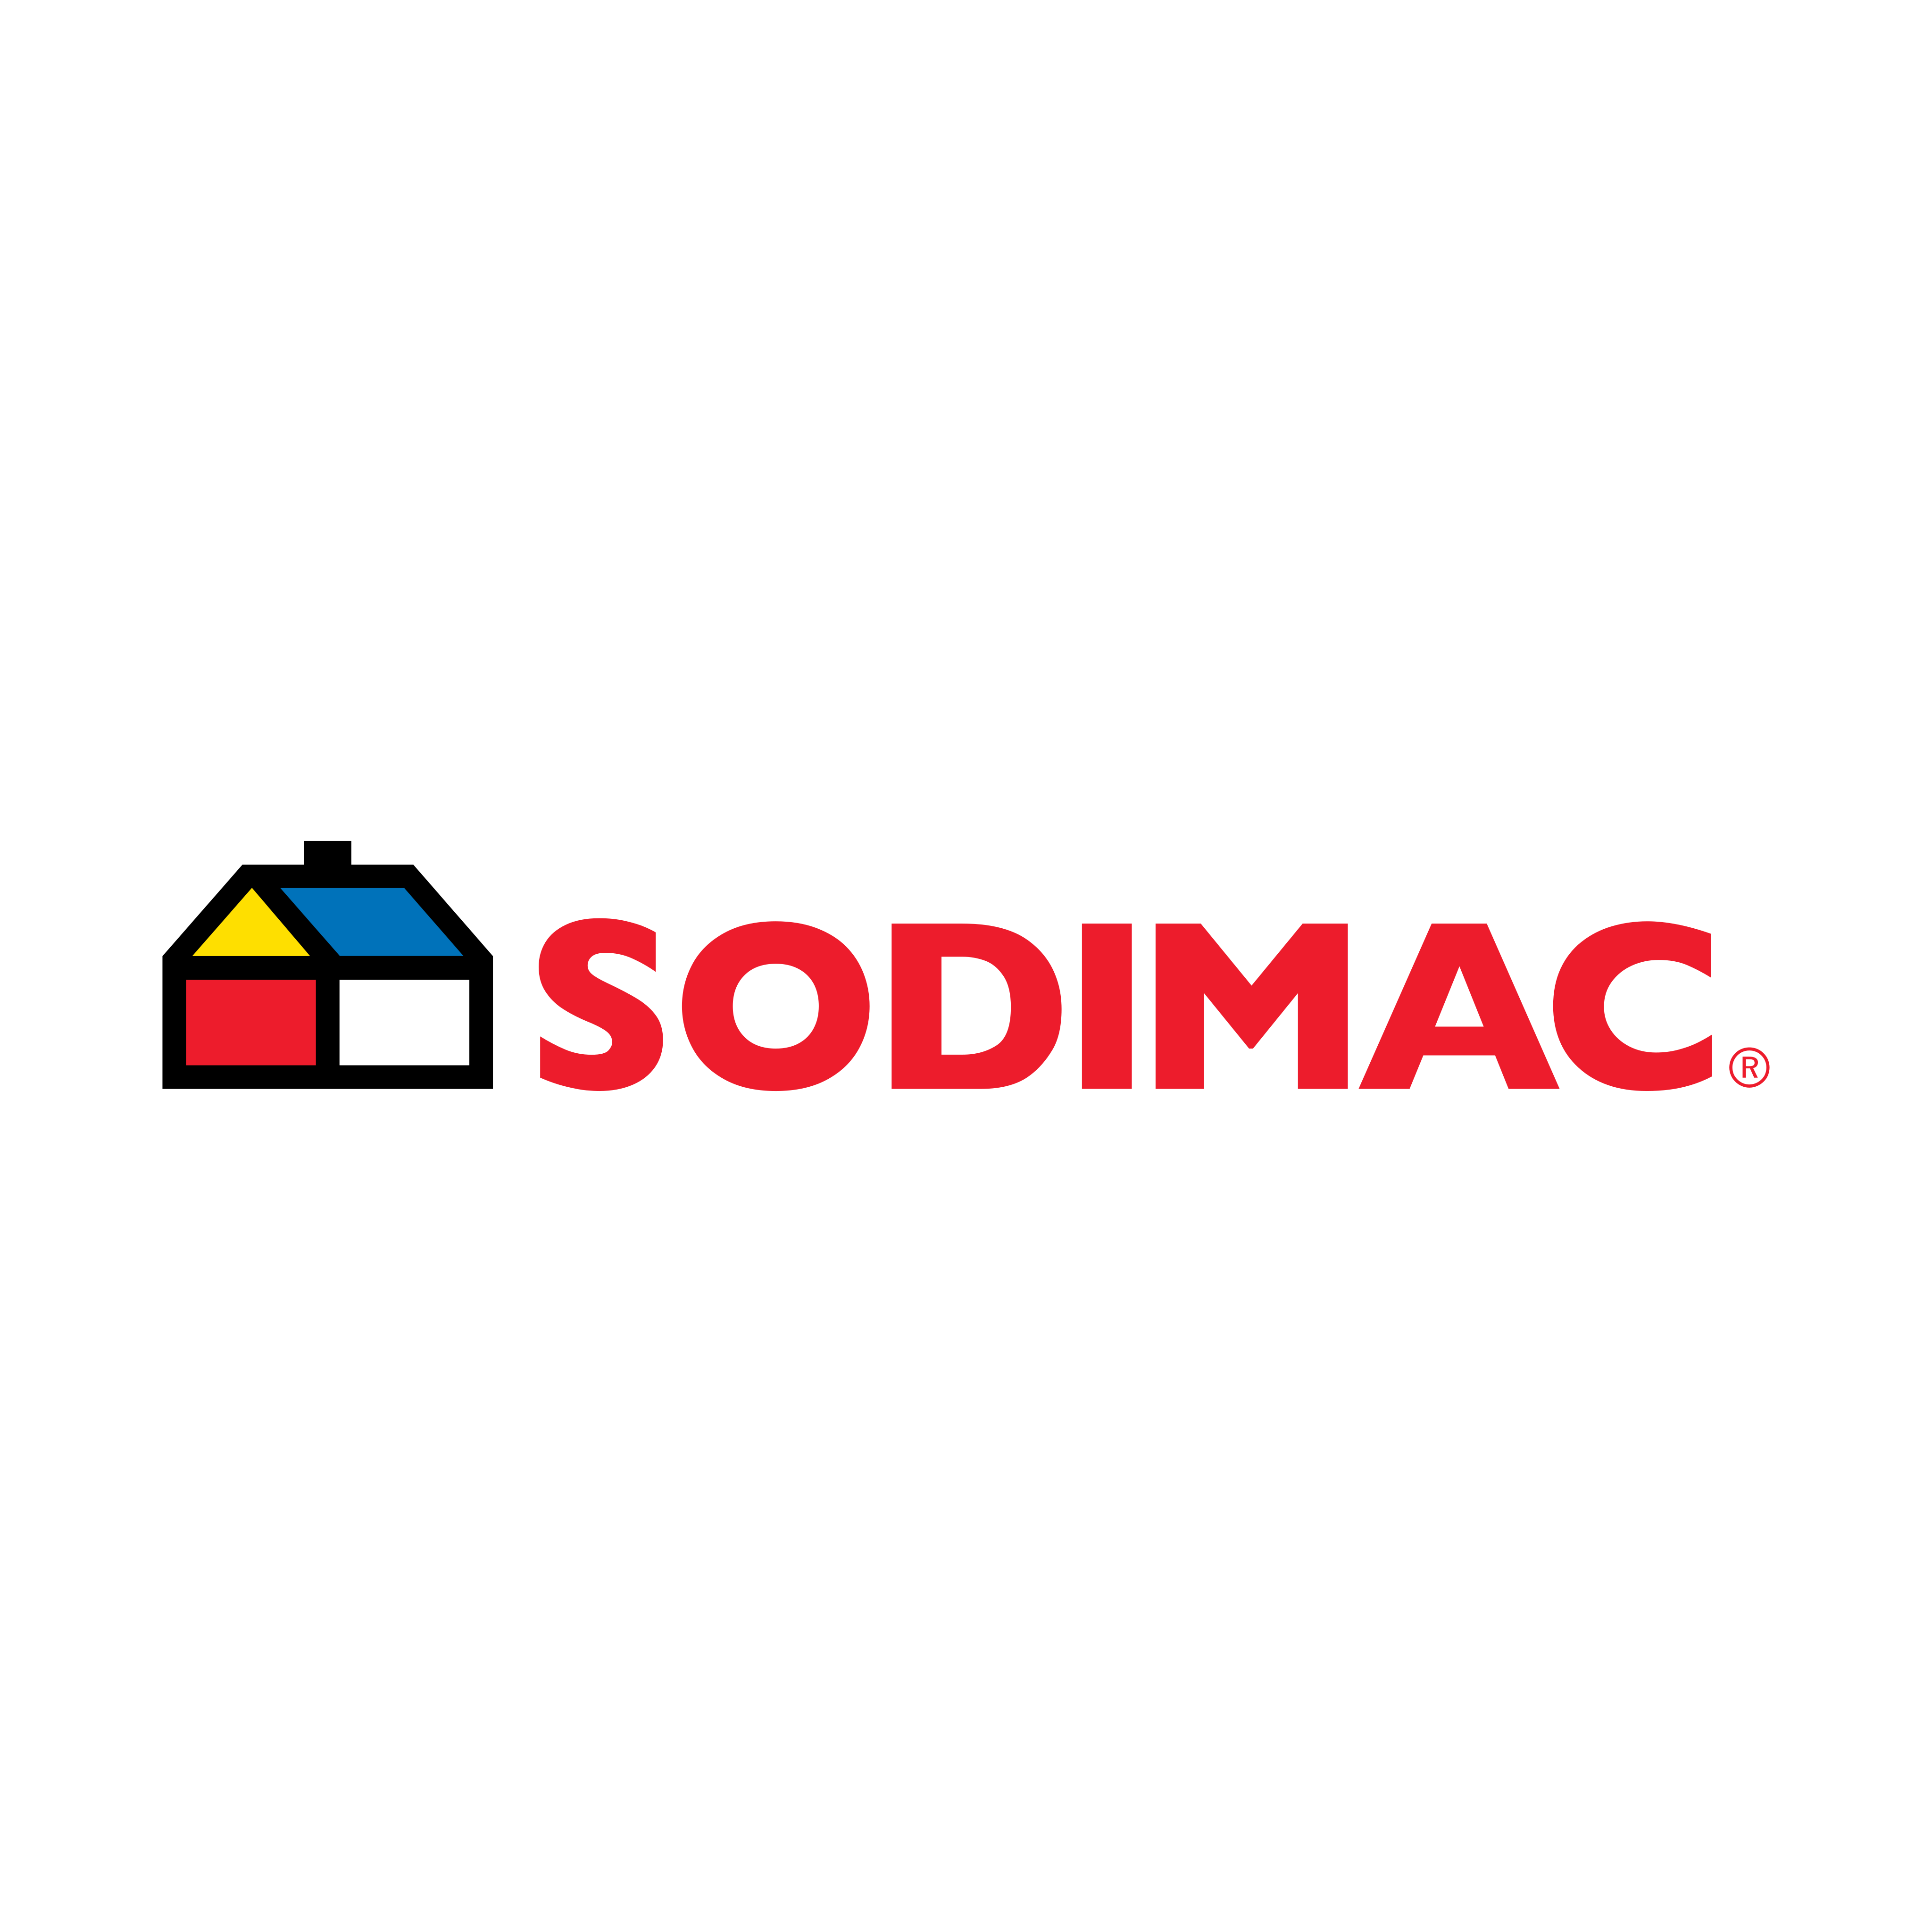 Sodimac Logo PNG.